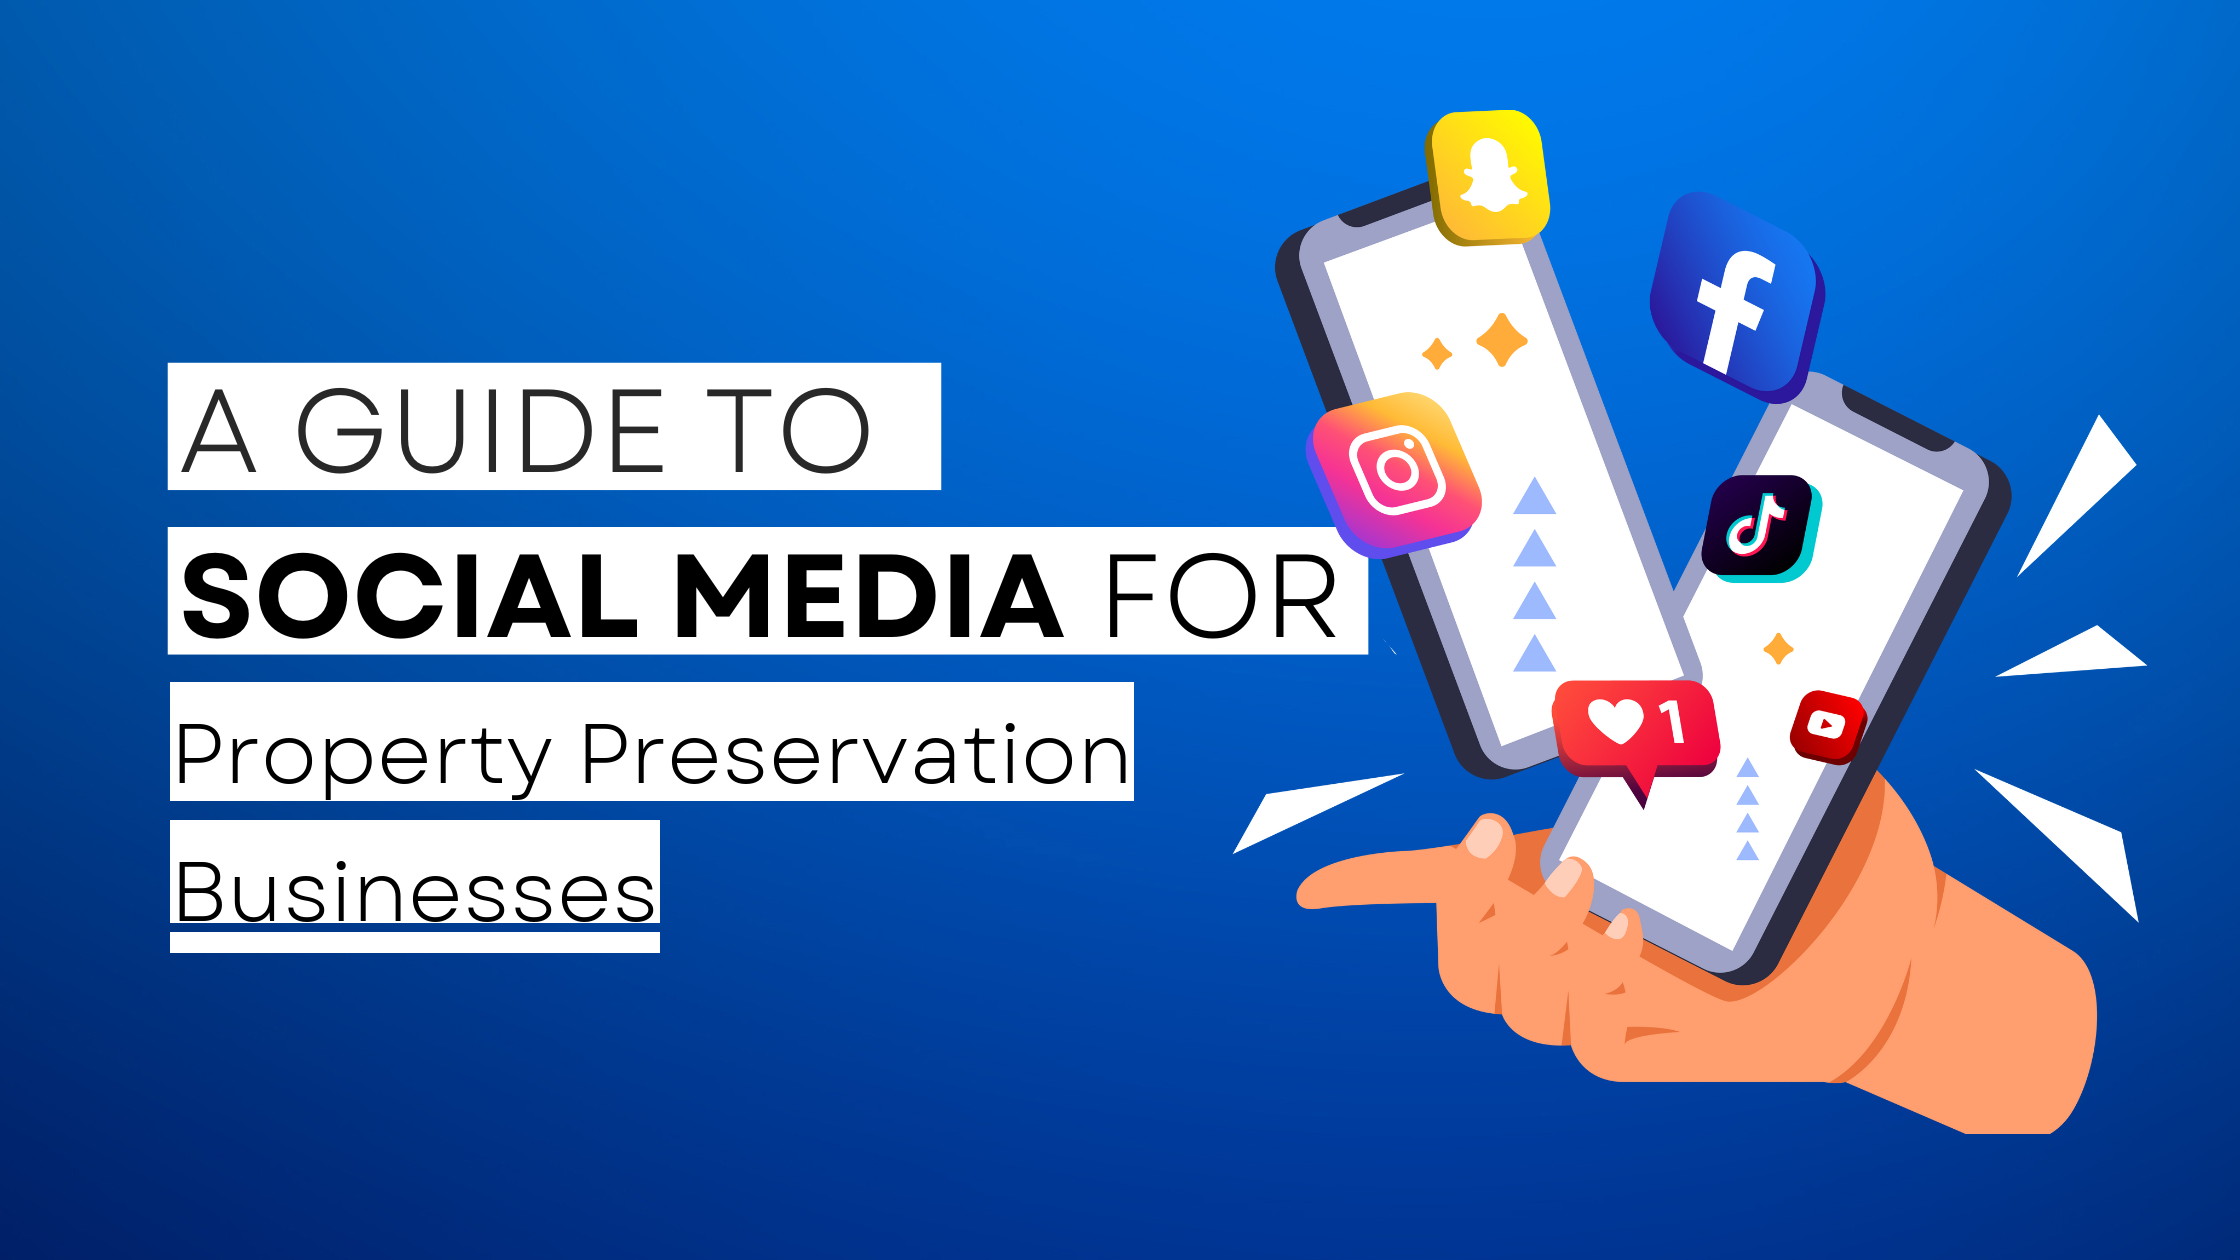 How to start Property Preservation on social media